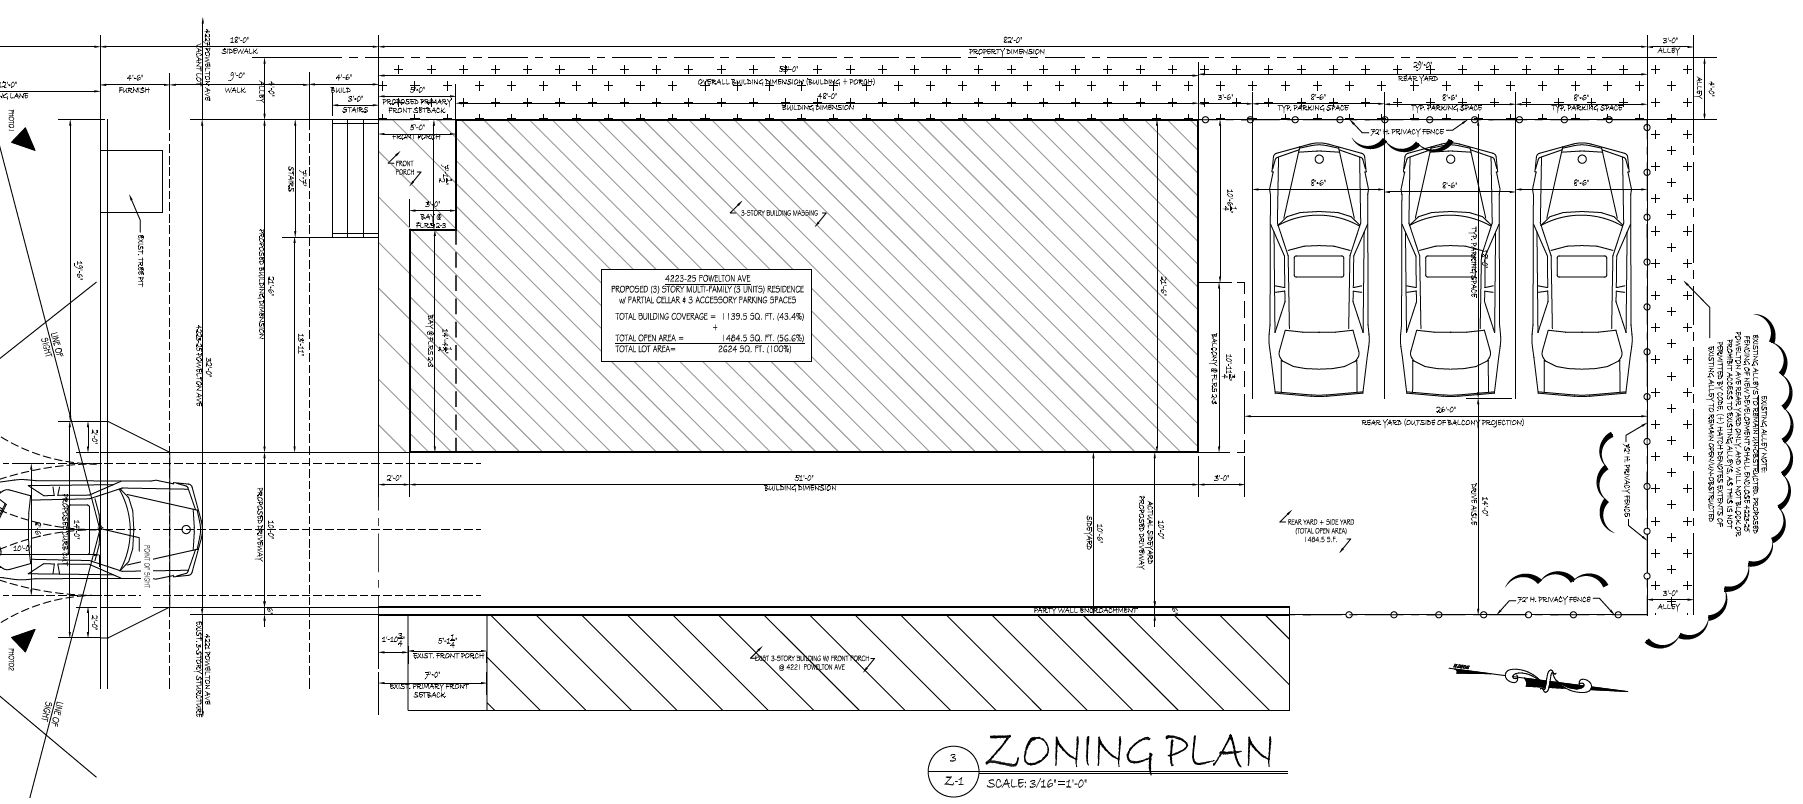 4223 Powelton Avenue. Site plan. Credit: KCA Design Associates via the Department of Planning and Development of the City of Philadelphia